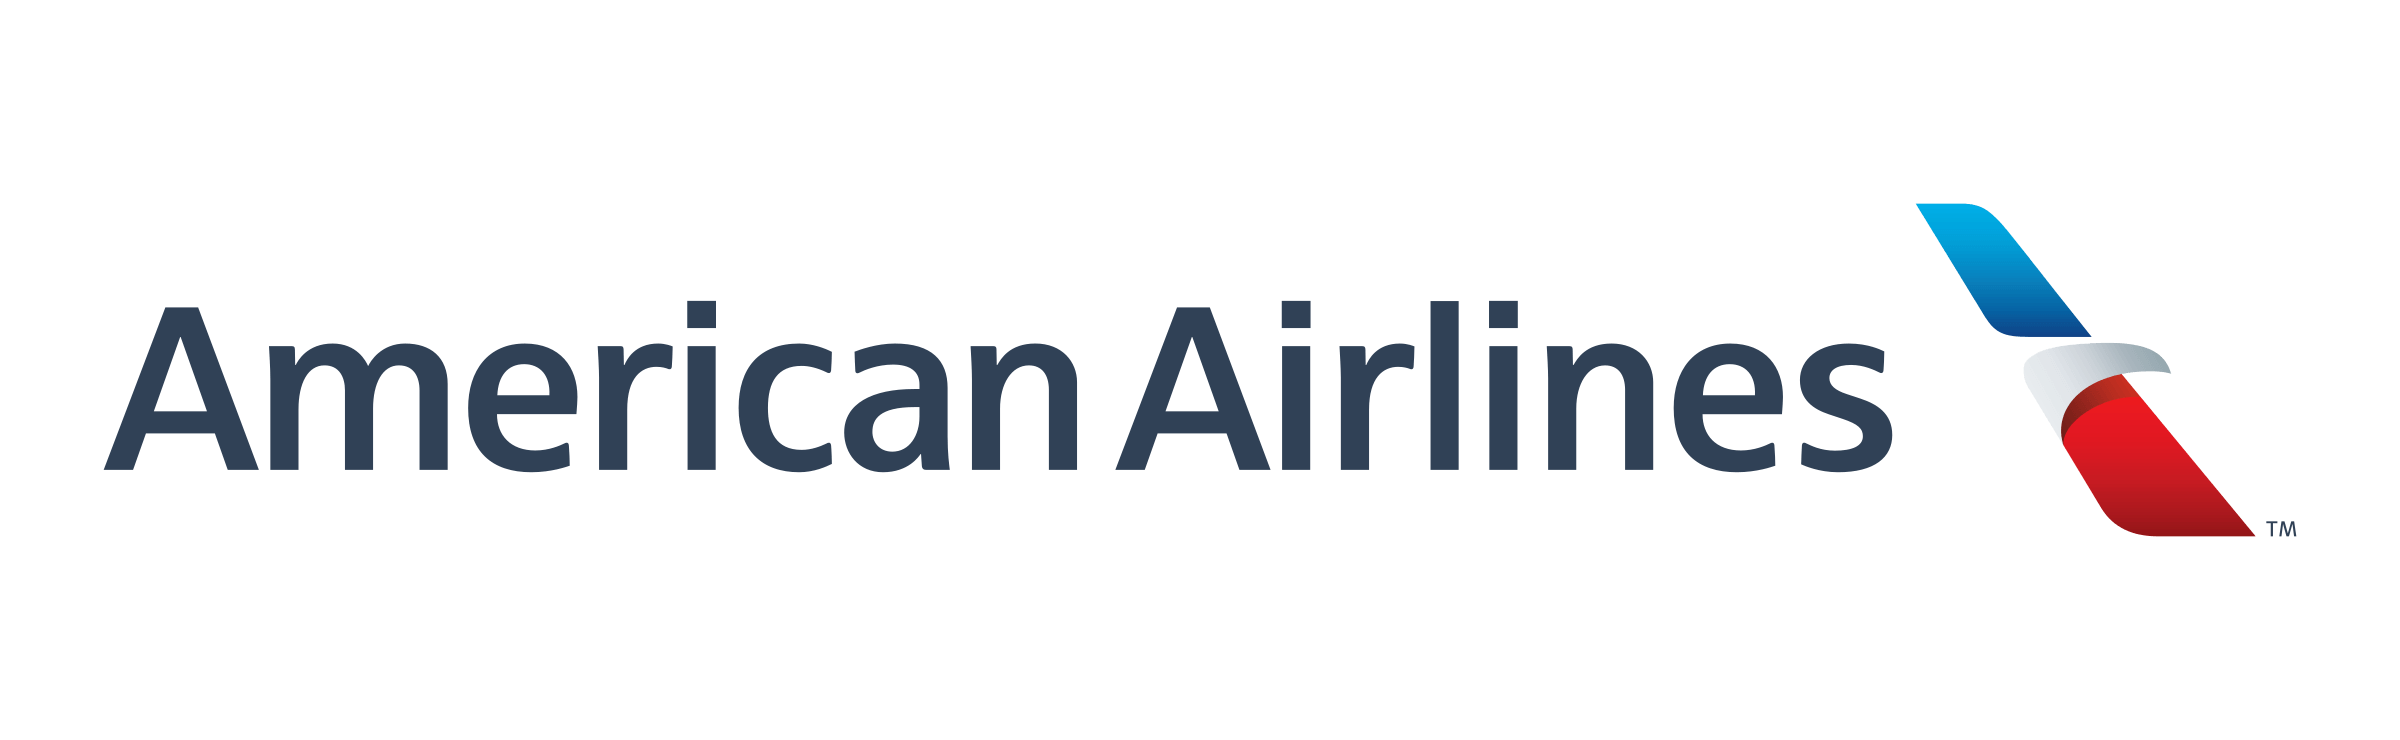 american airline logo